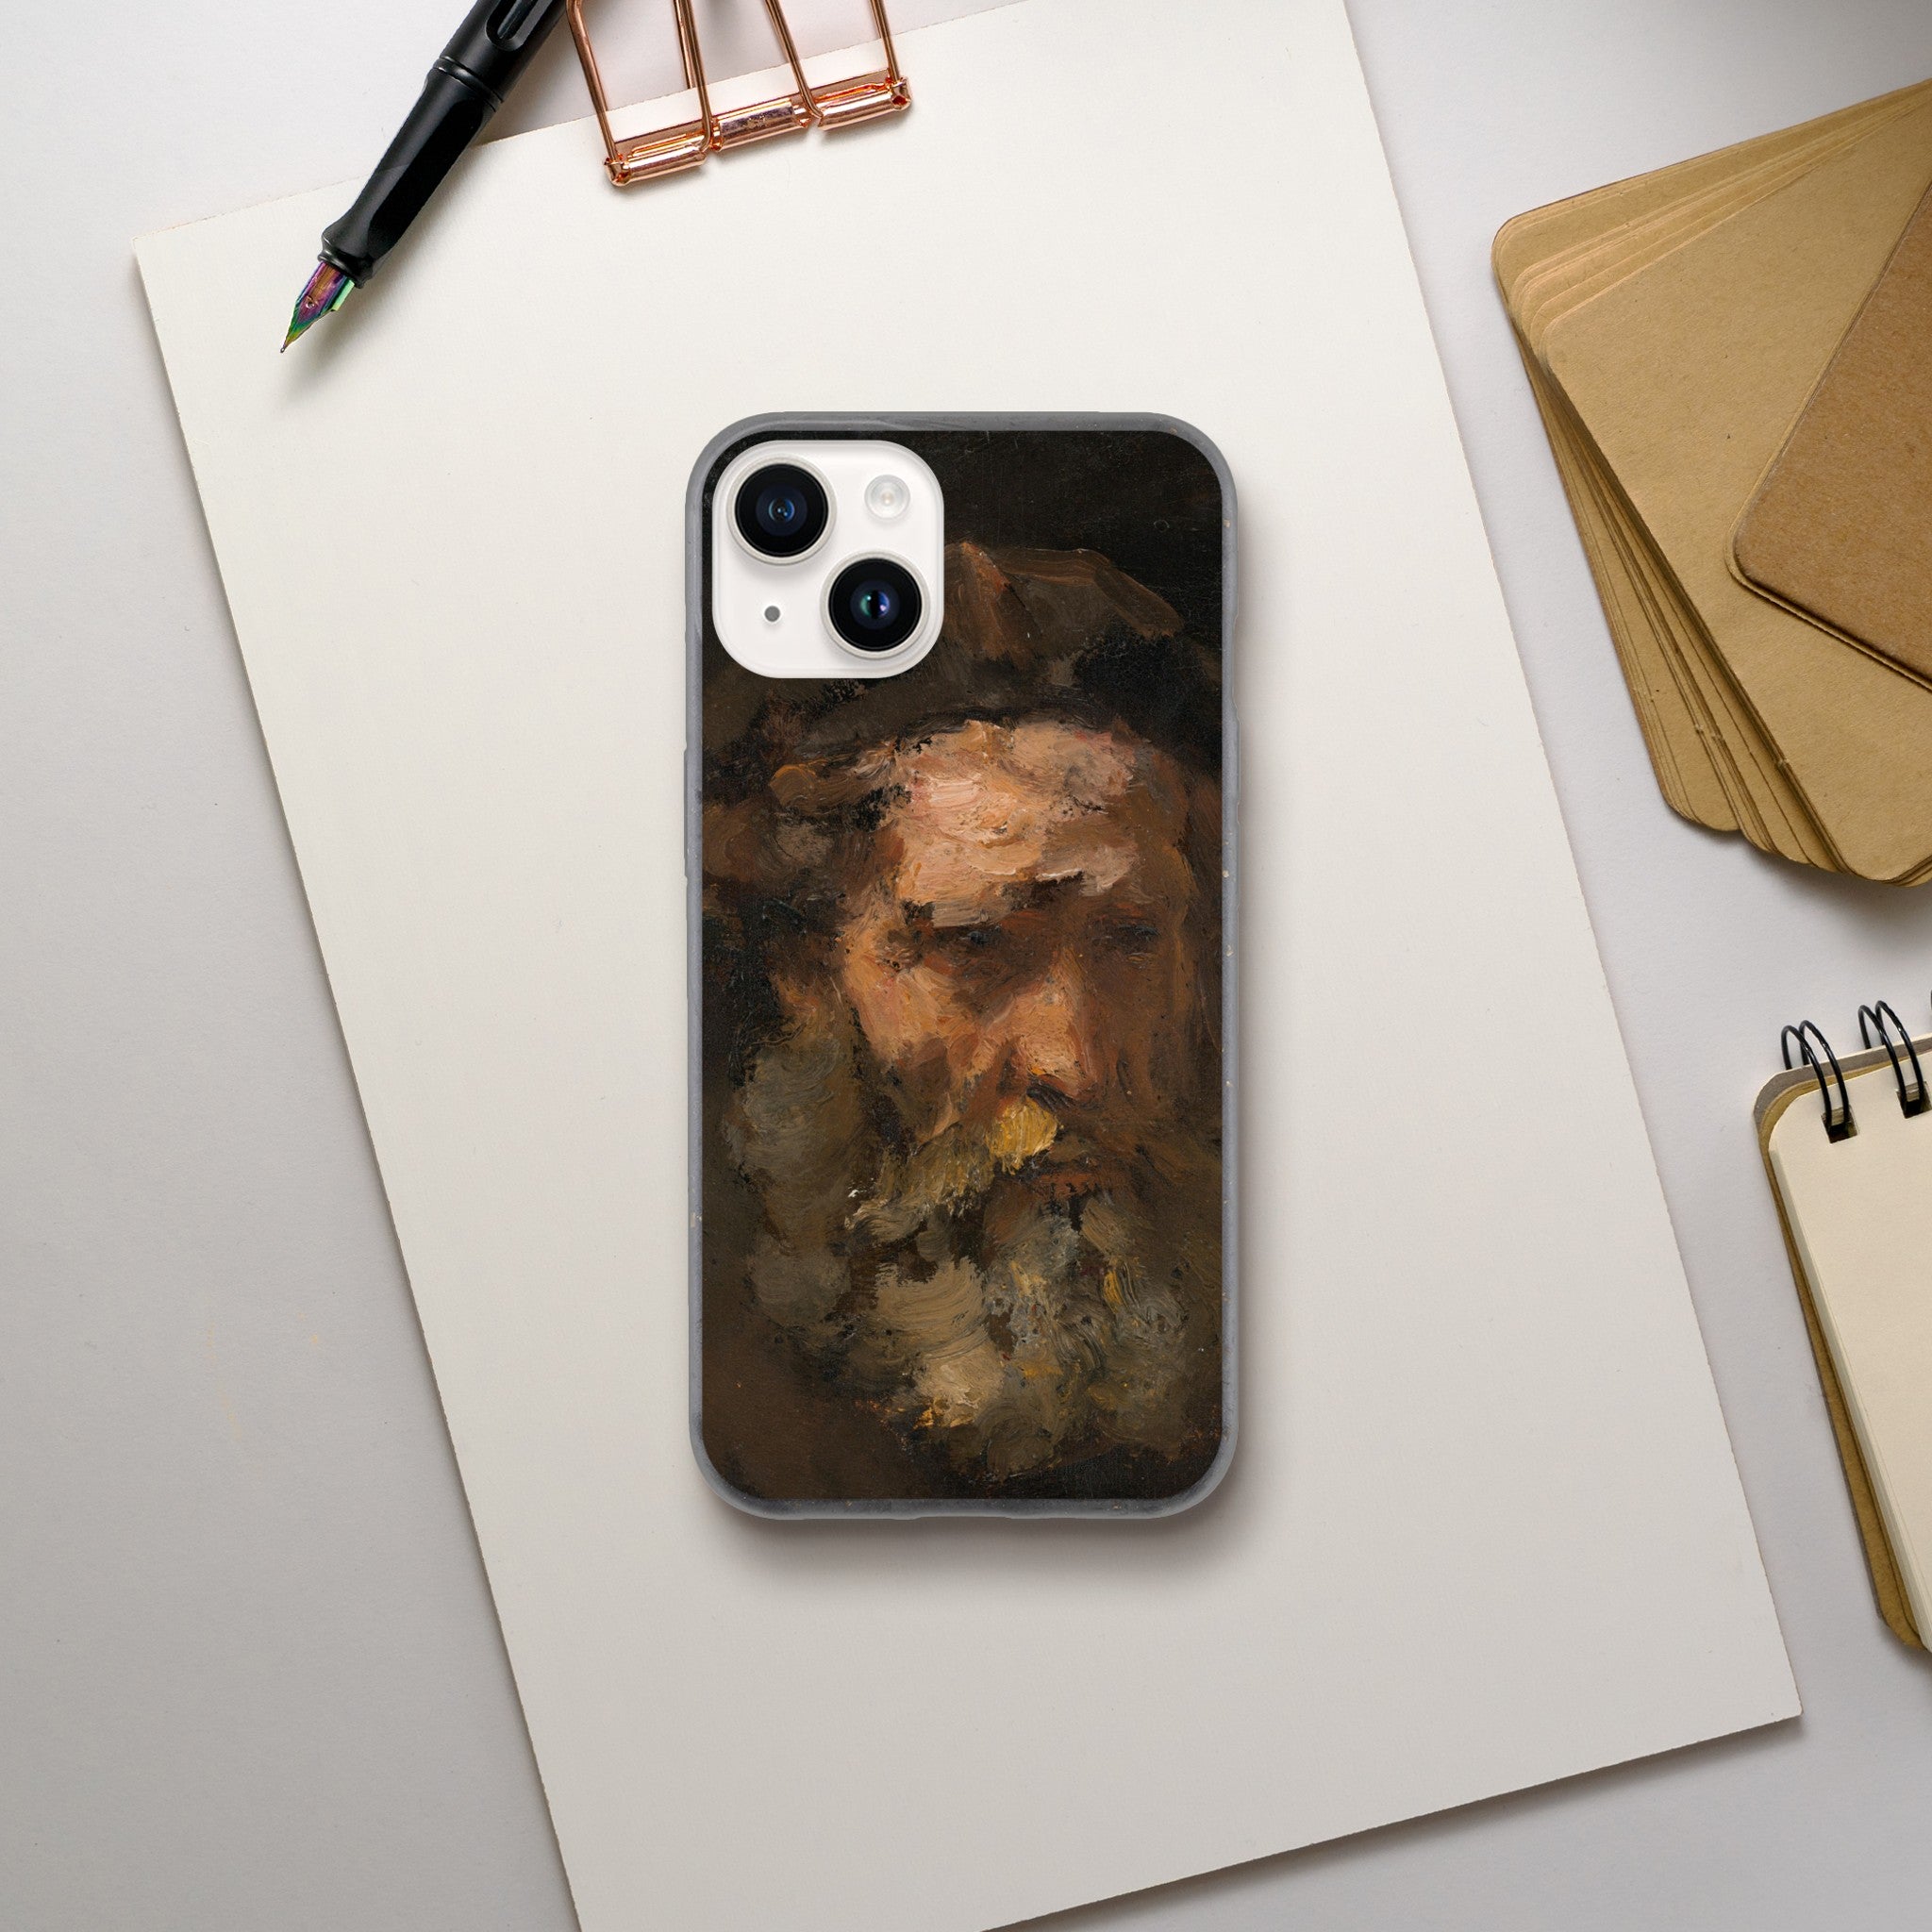 Painted Man I-phone Case - Bio case